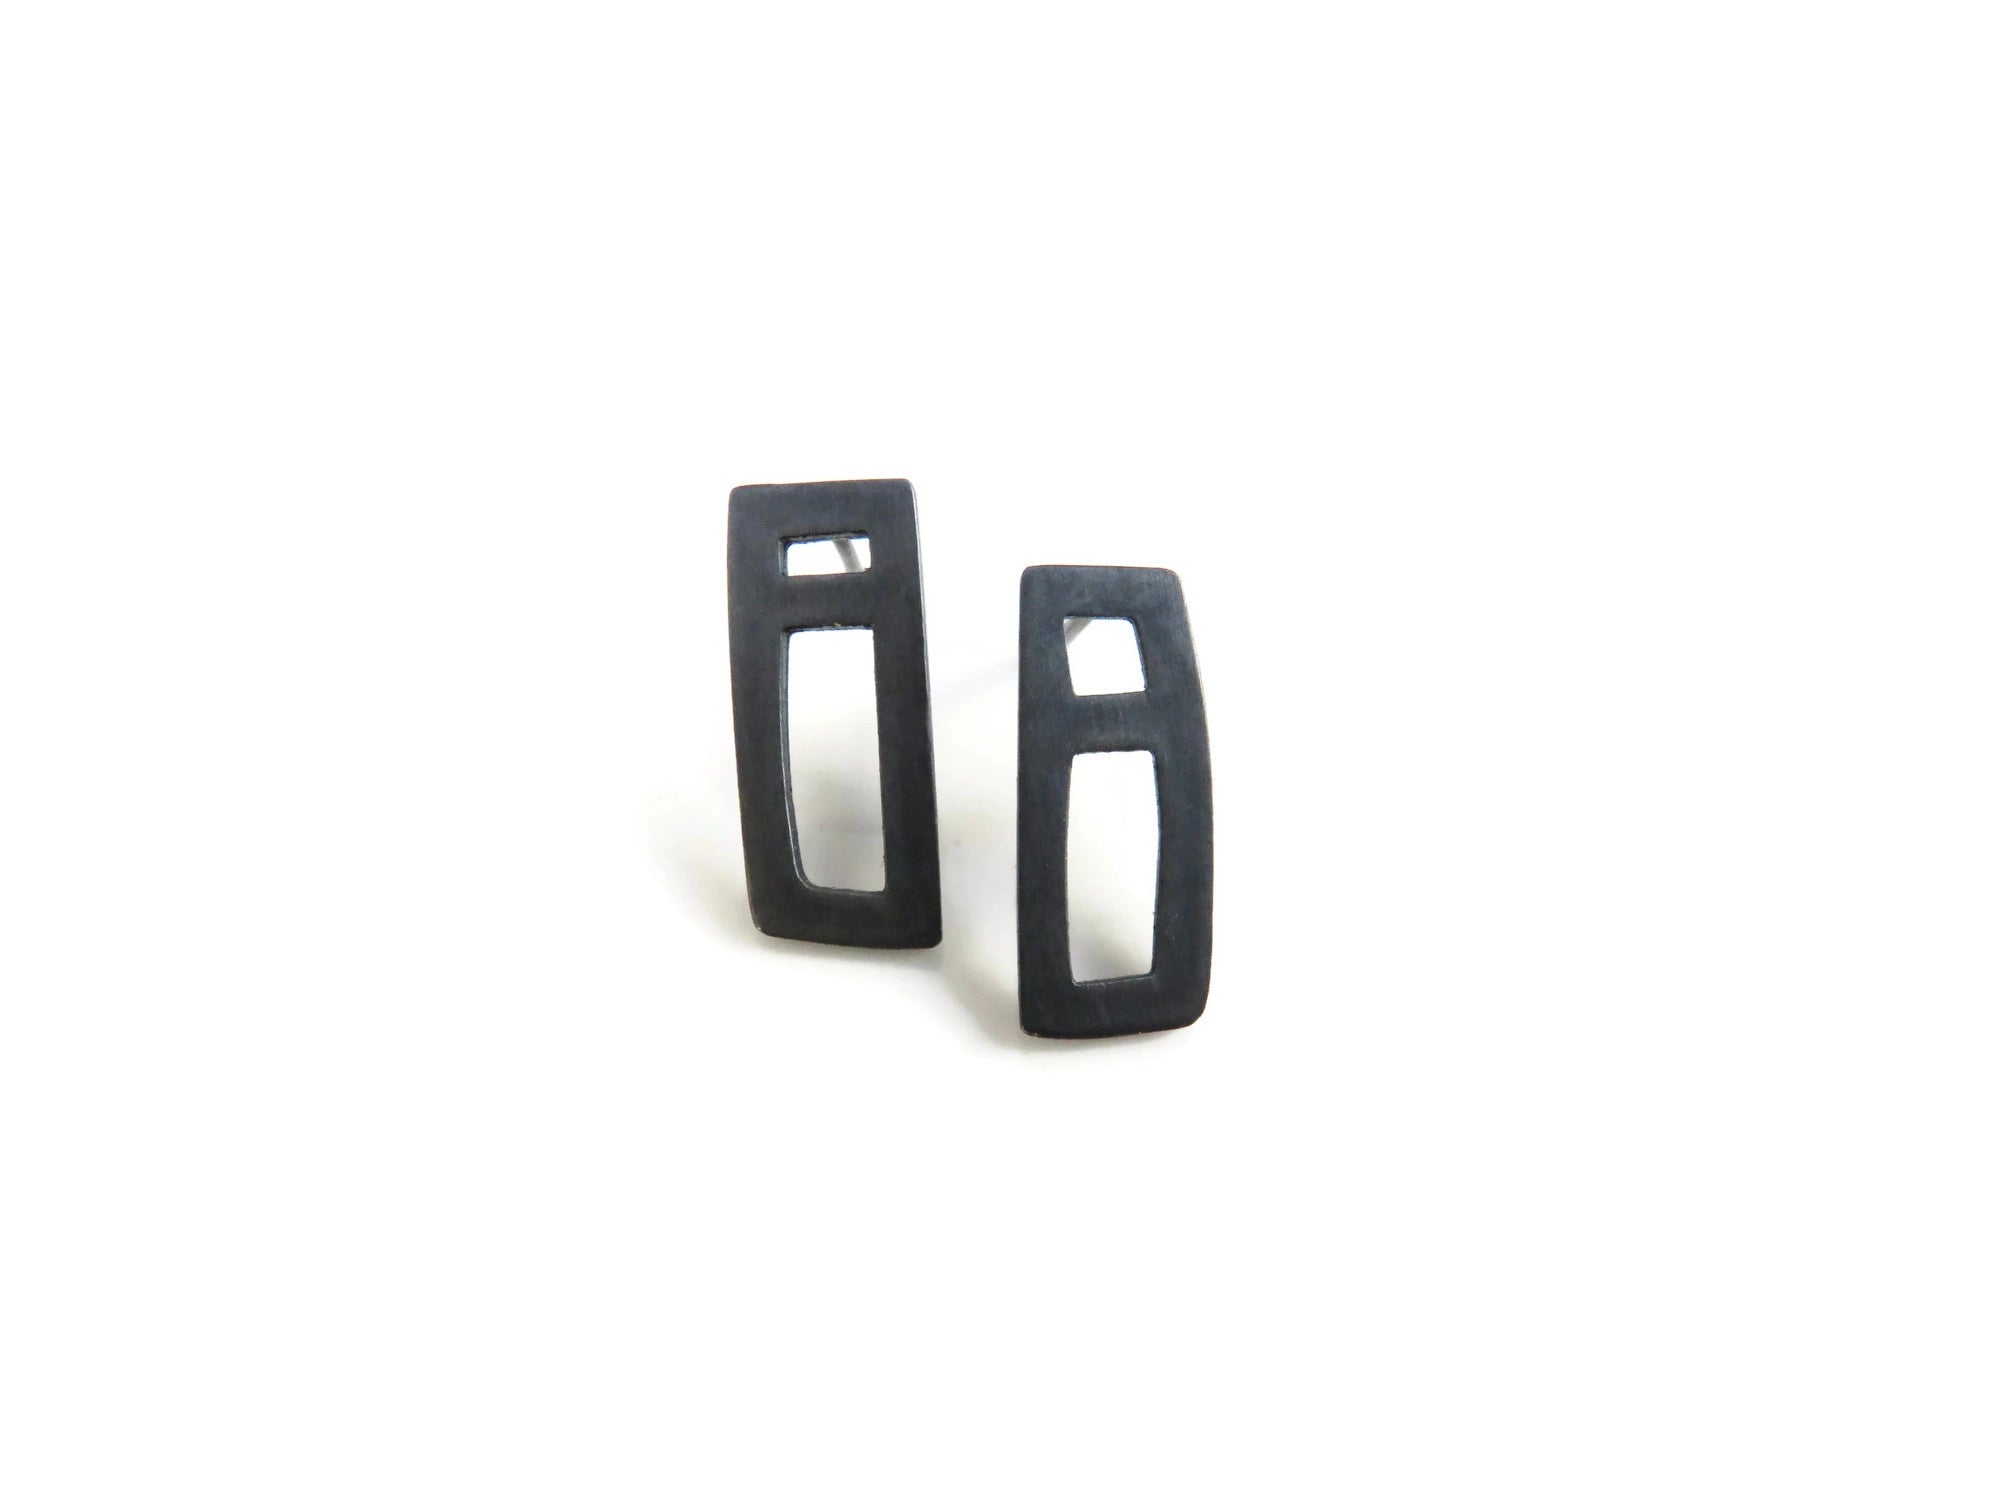 Asymmetrical Oxidized Silver Stud Earrings | KimyaJoyas